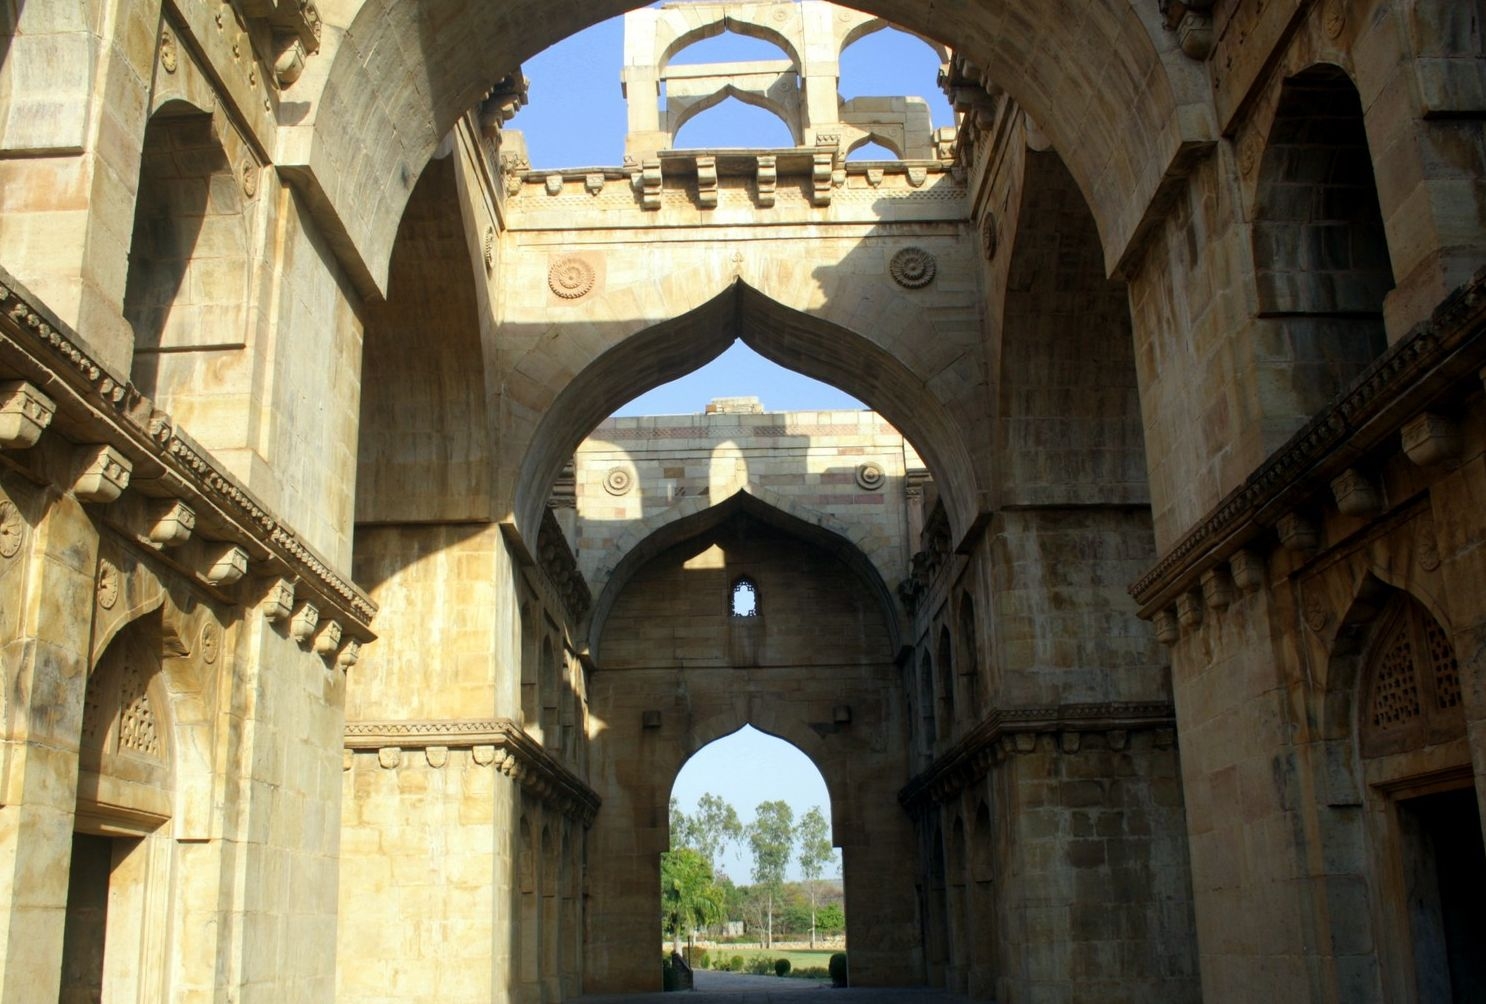 Koshak Mahal